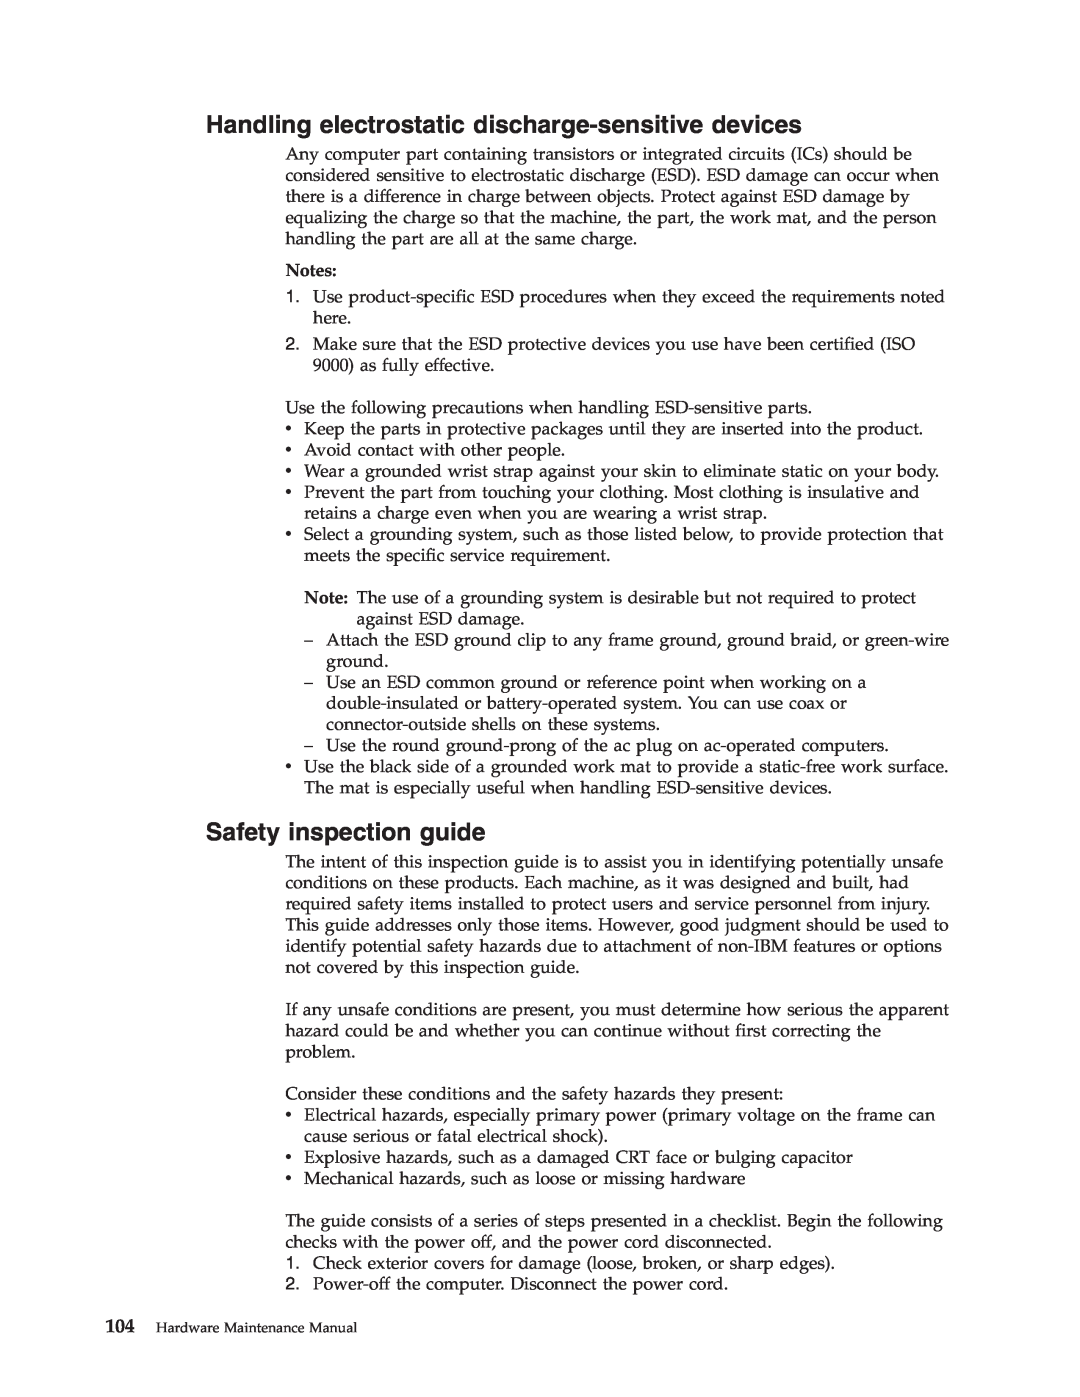 IBM 6643, 2179 manual Handling electrostatic discharge-sensitive devices, Safety inspection guide 